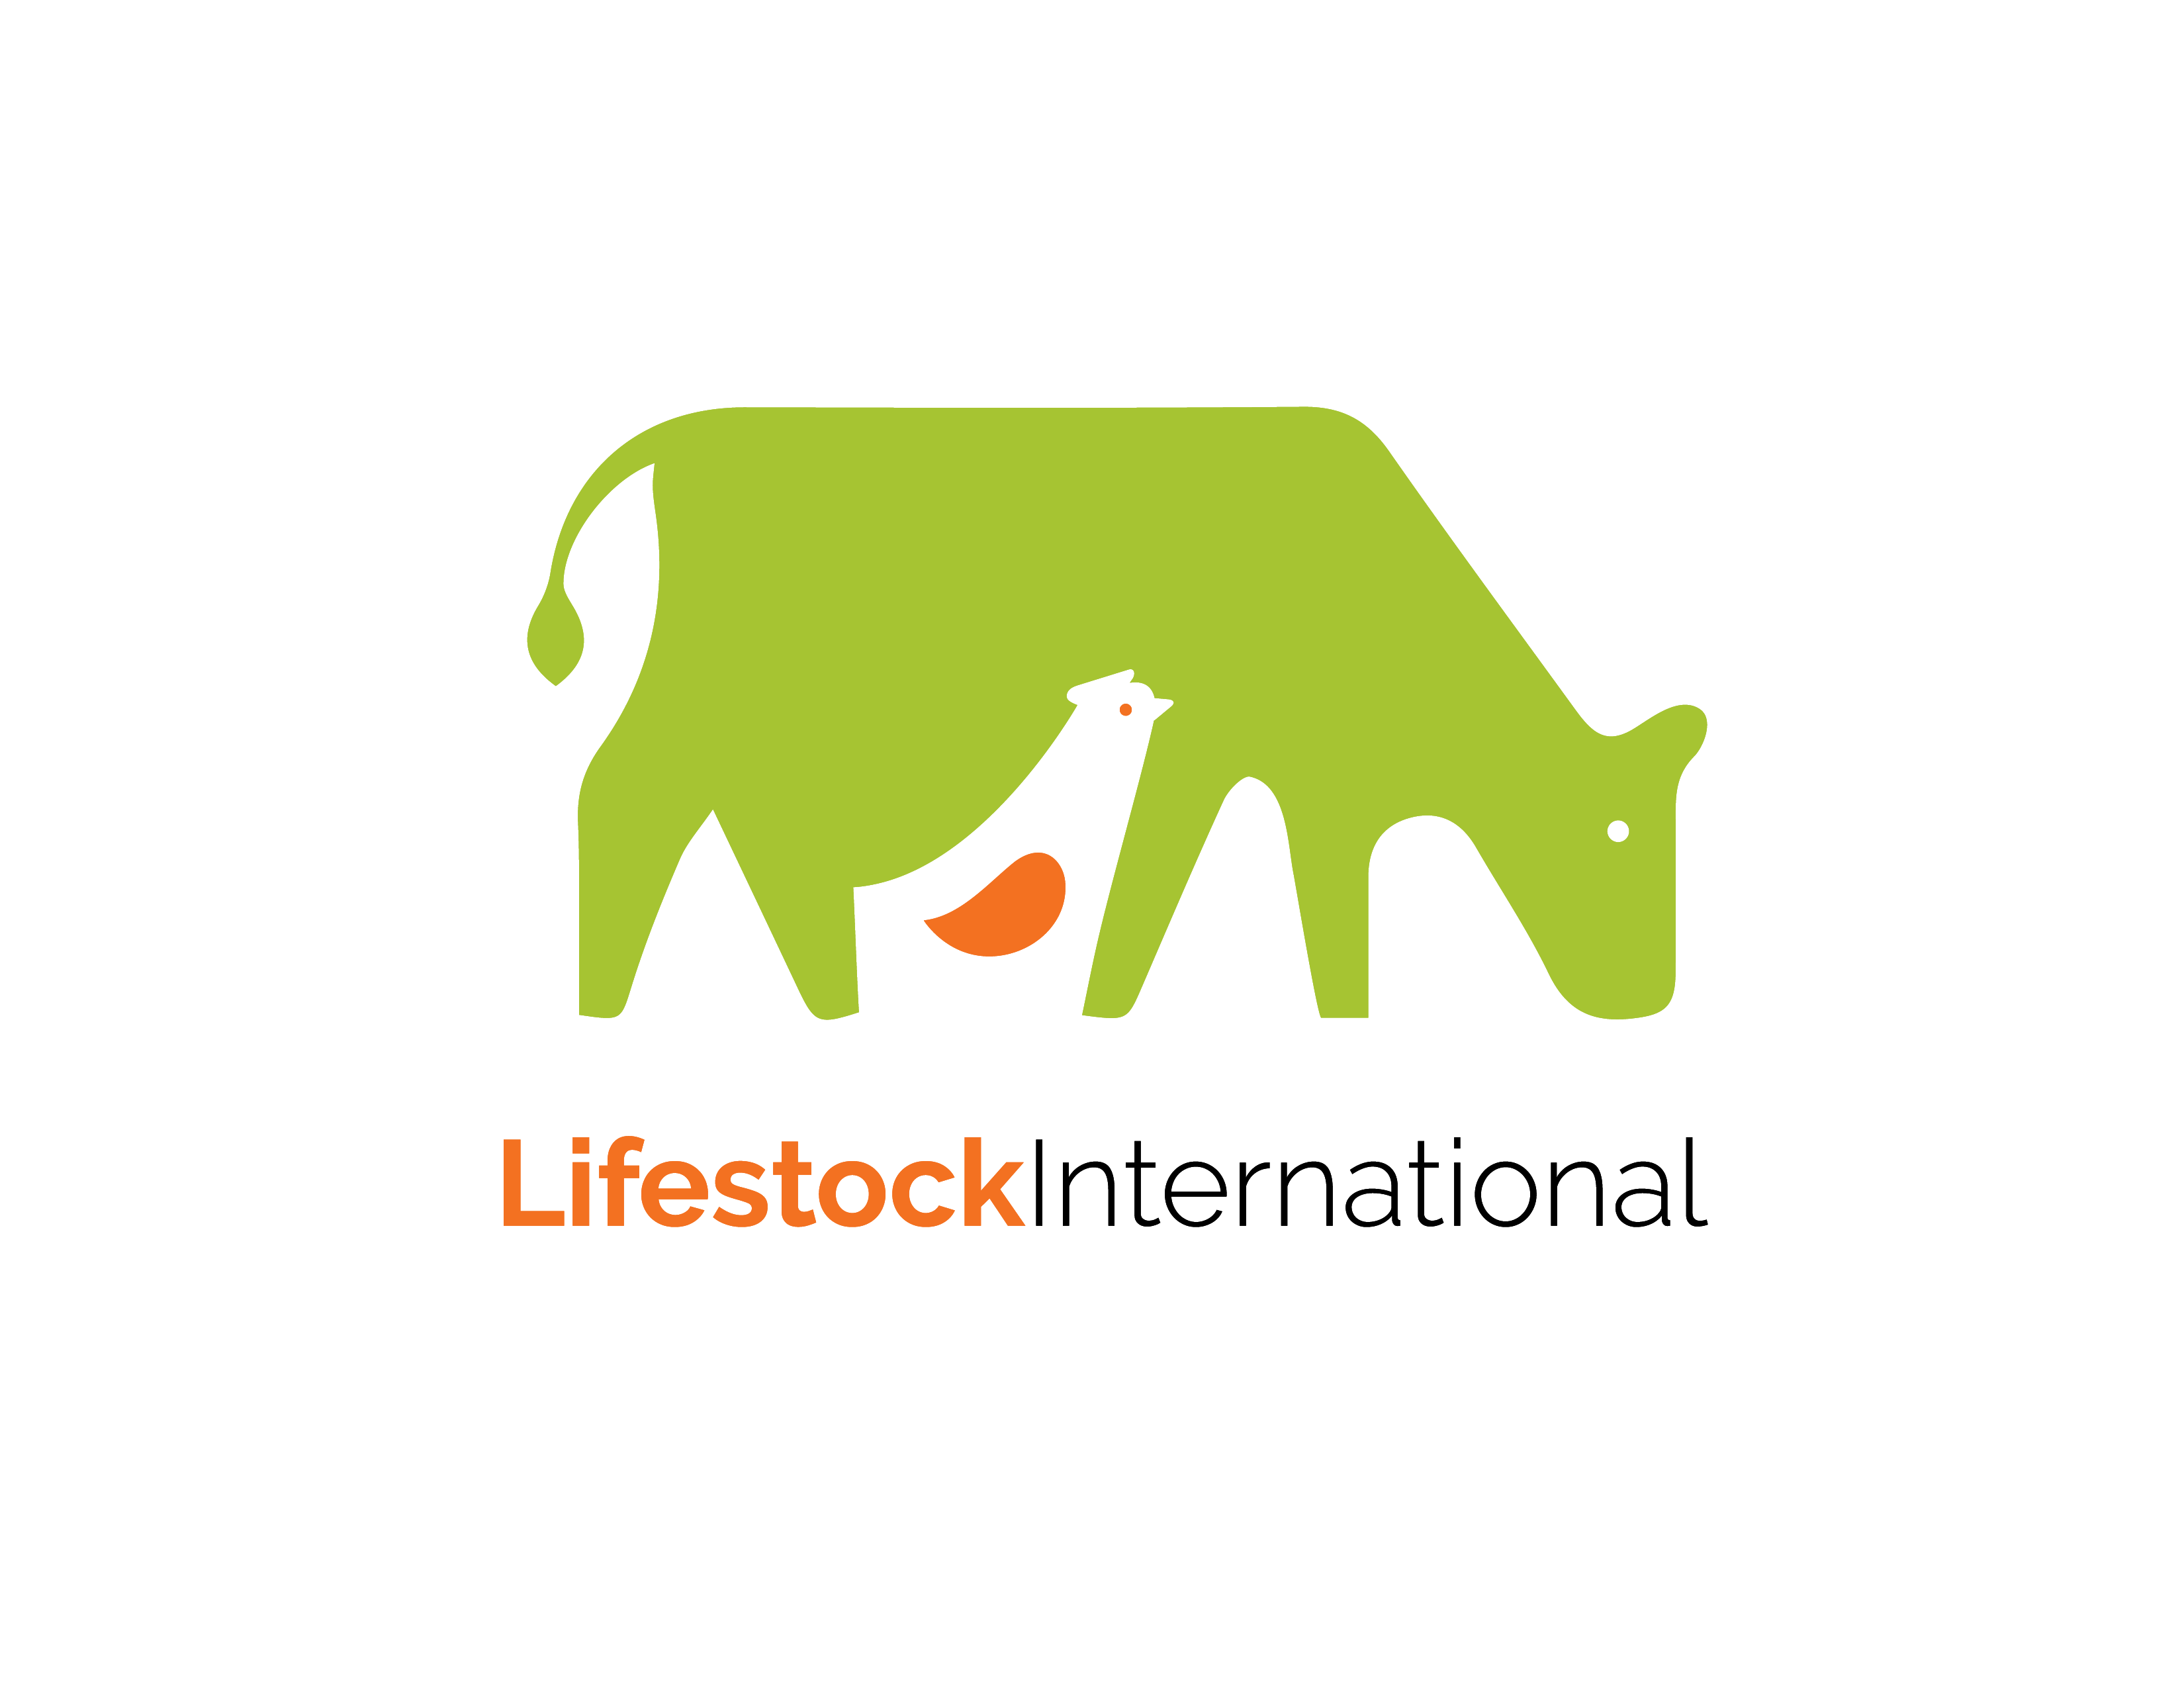 Lifestock International logo